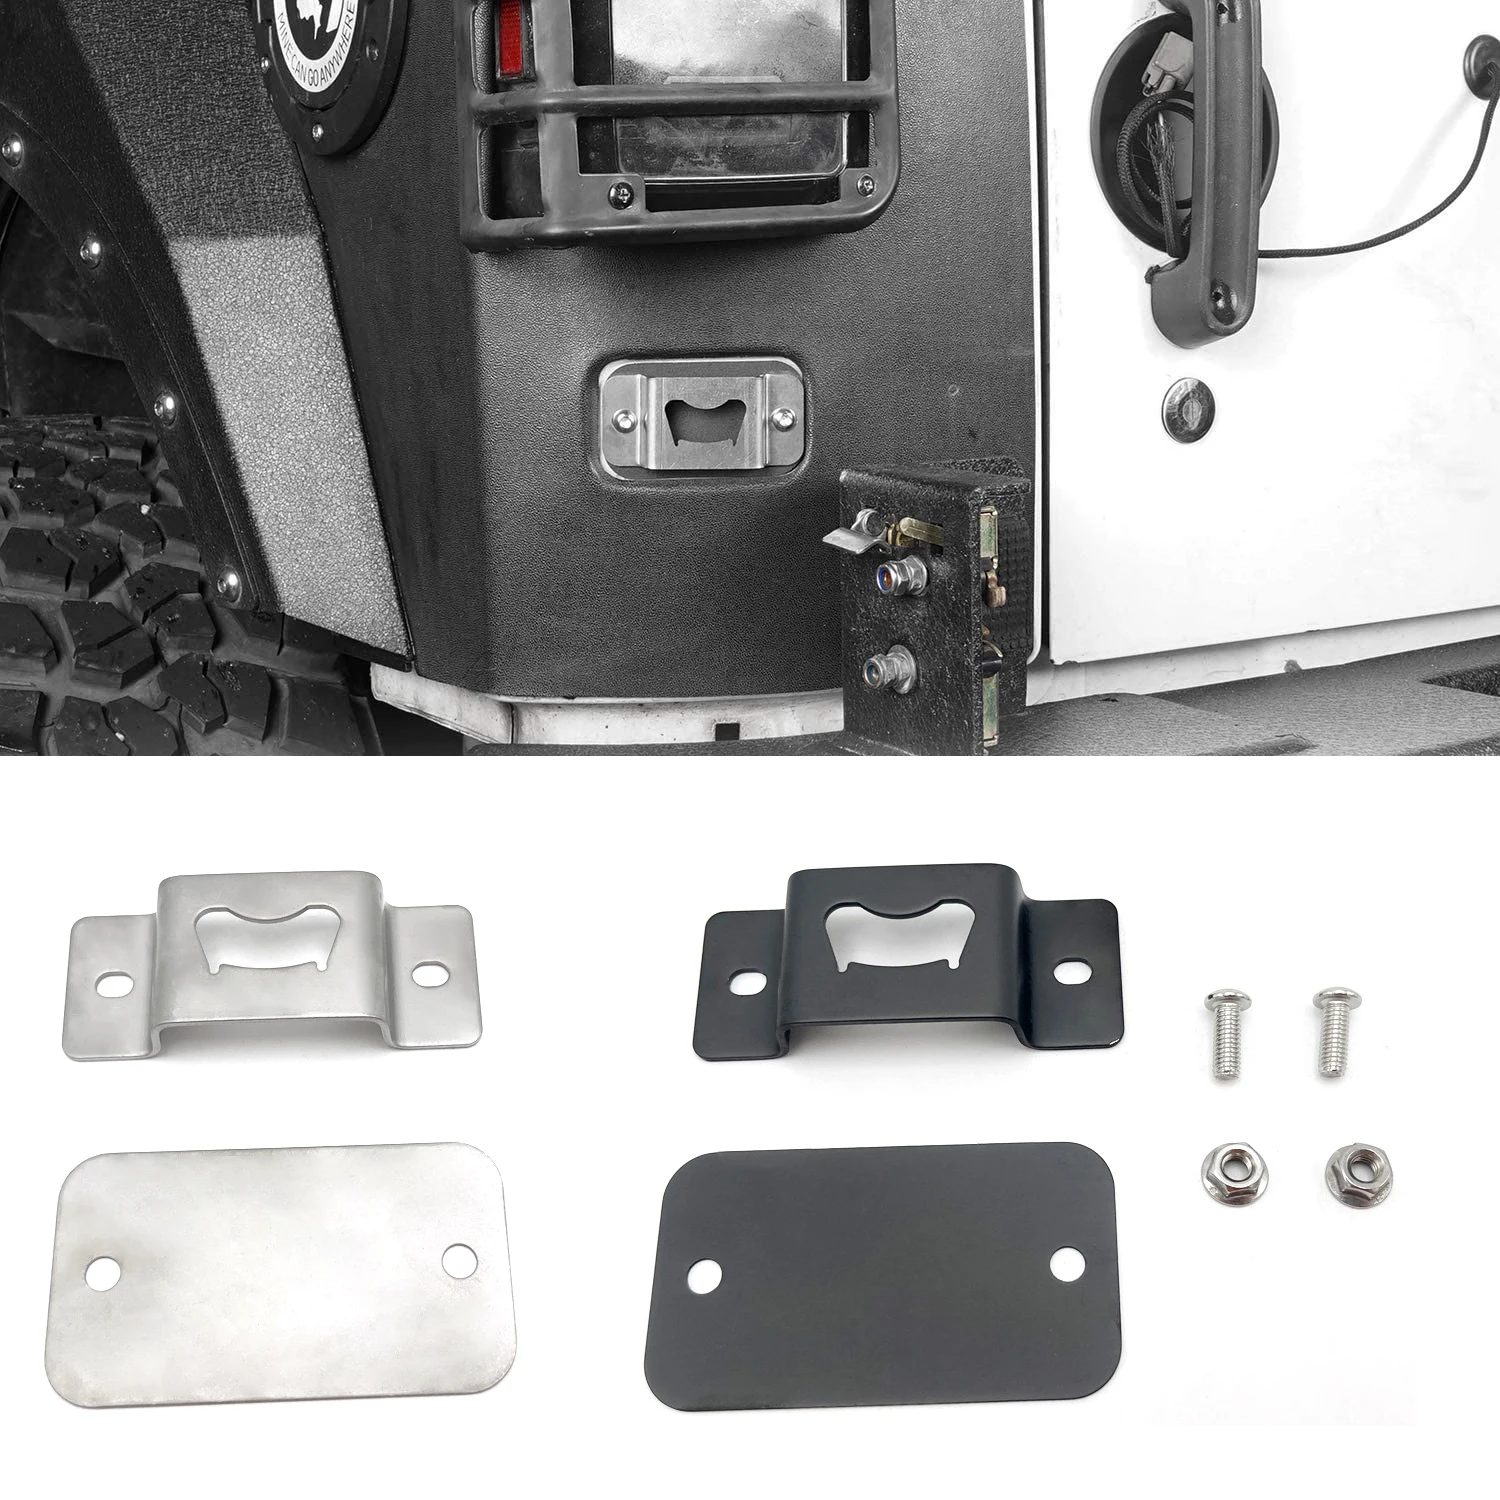 

Hooke Road Wrangler Bottle Opener Rear License Plate Tailgate Accessory Fit Accessory for 2007-2018 Jeep JK Wrangler